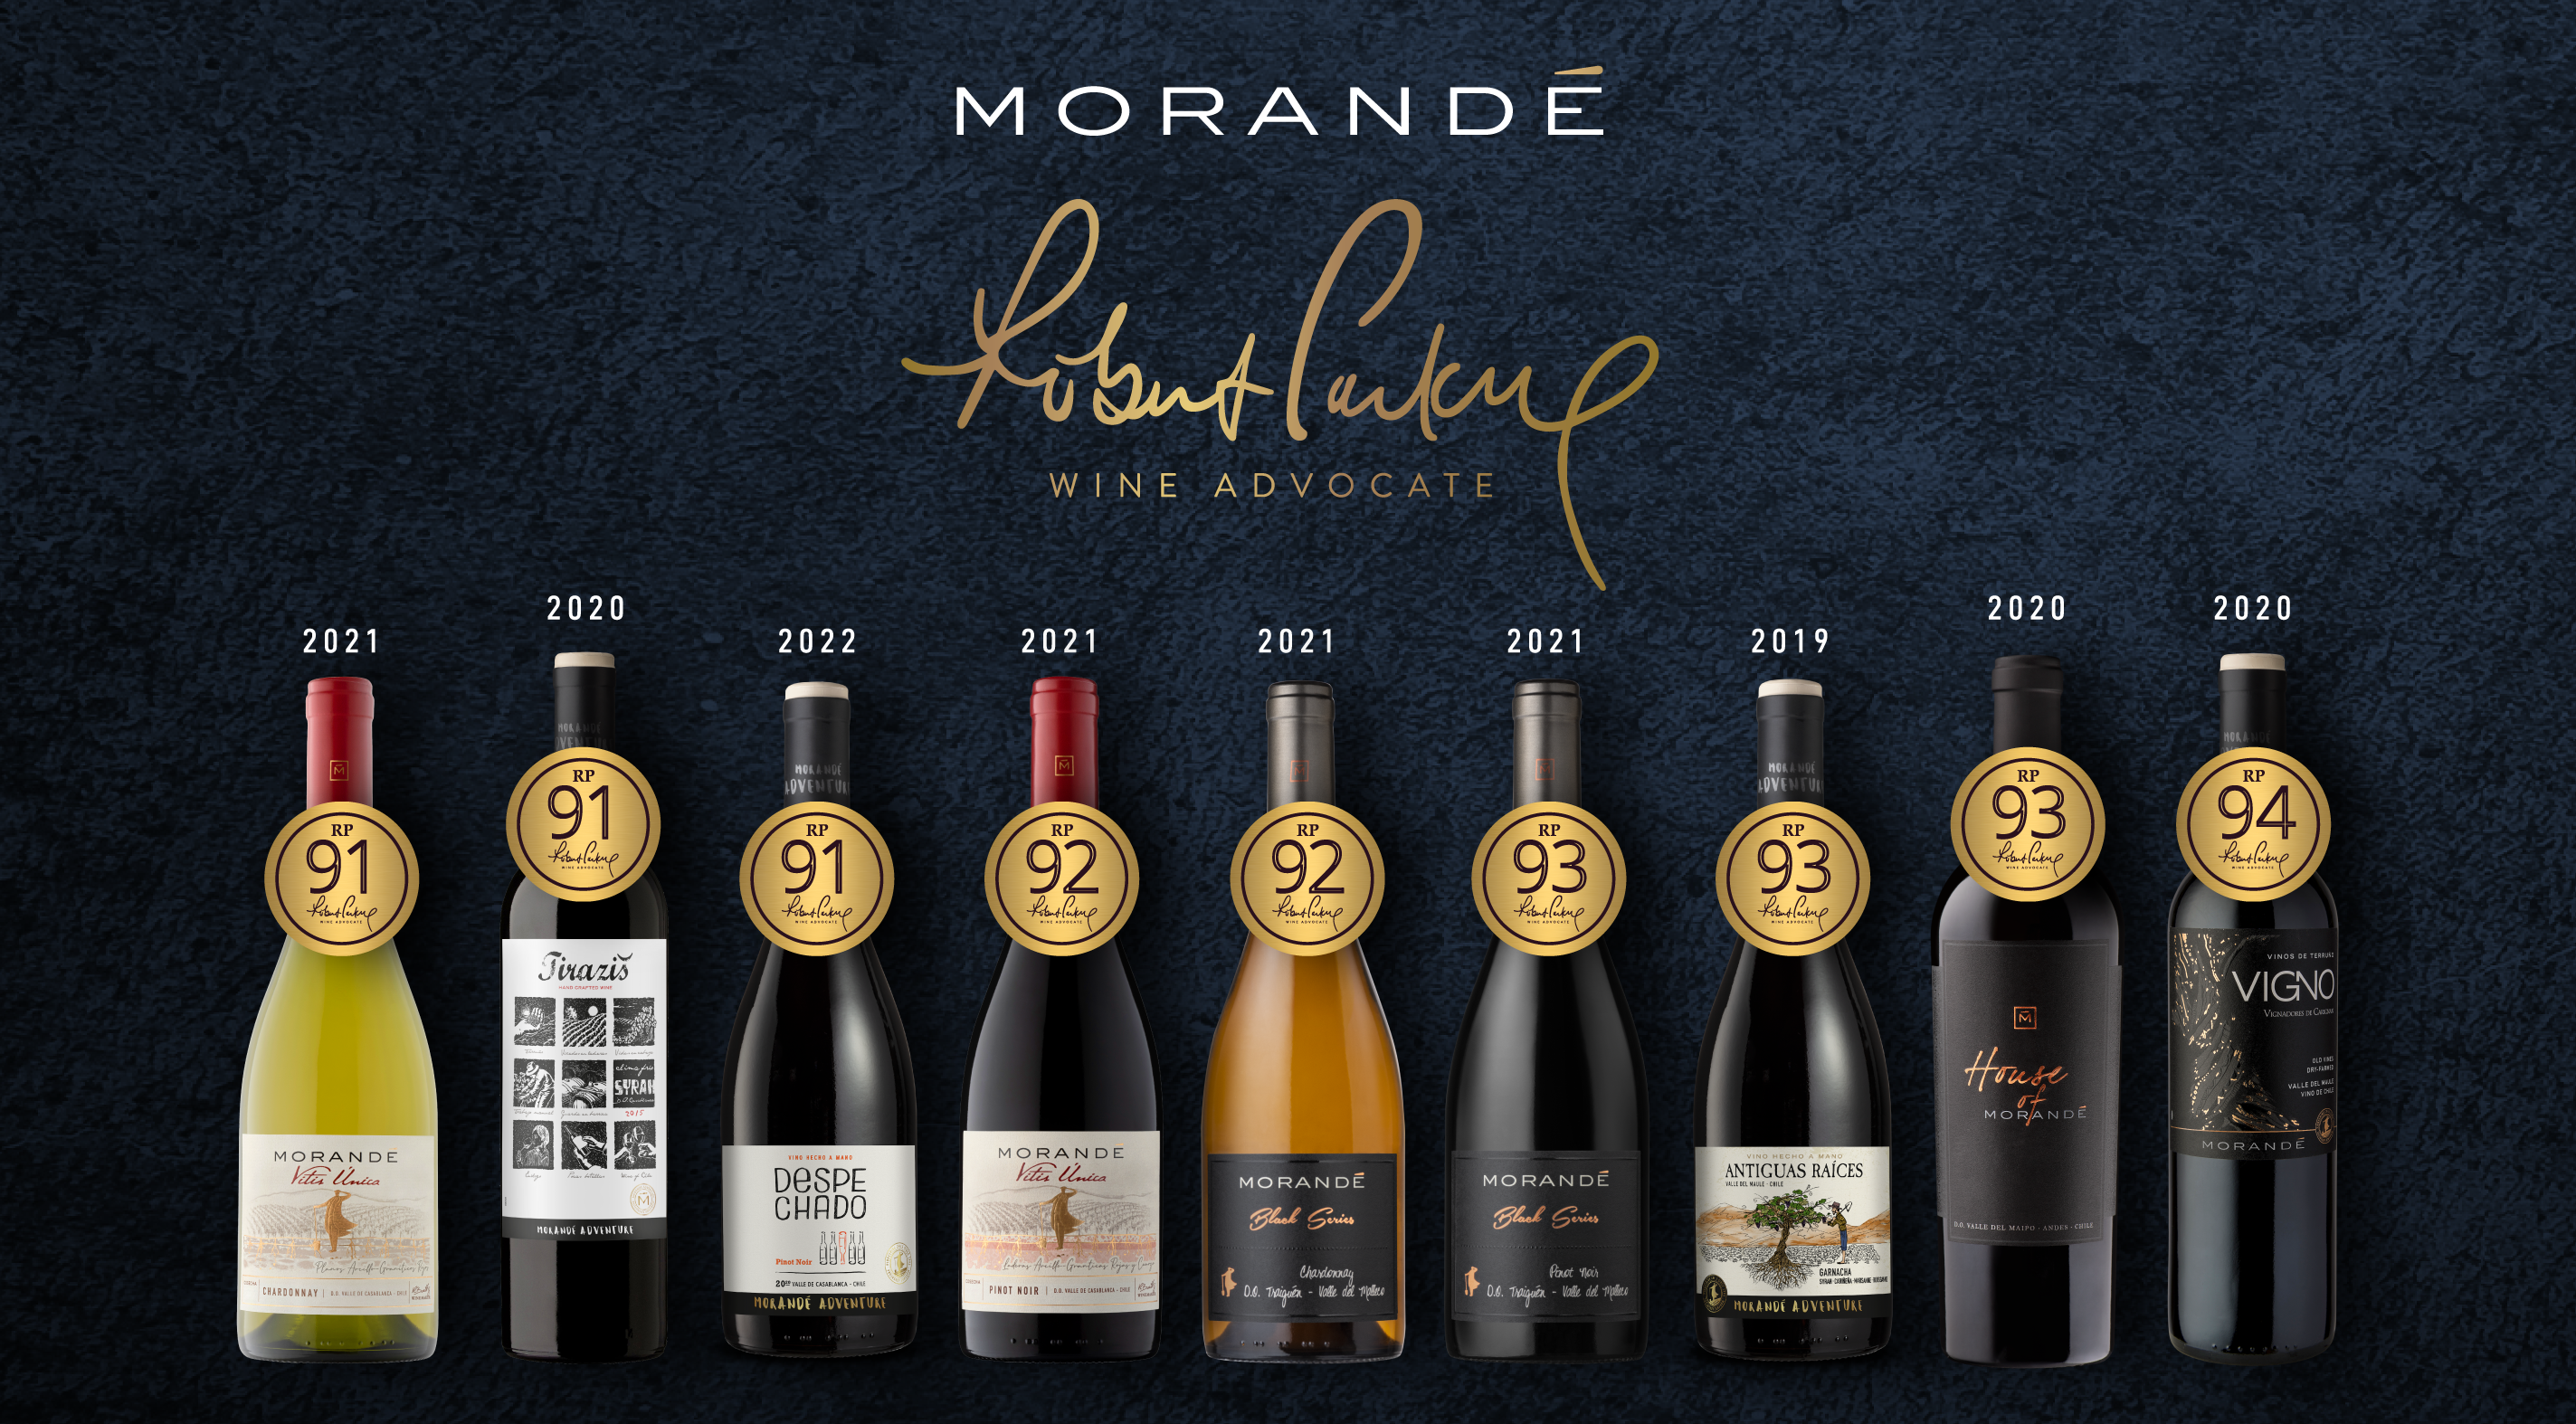 Robert Parker´s Wine Advocate entrega grandes puntajes a Morandé